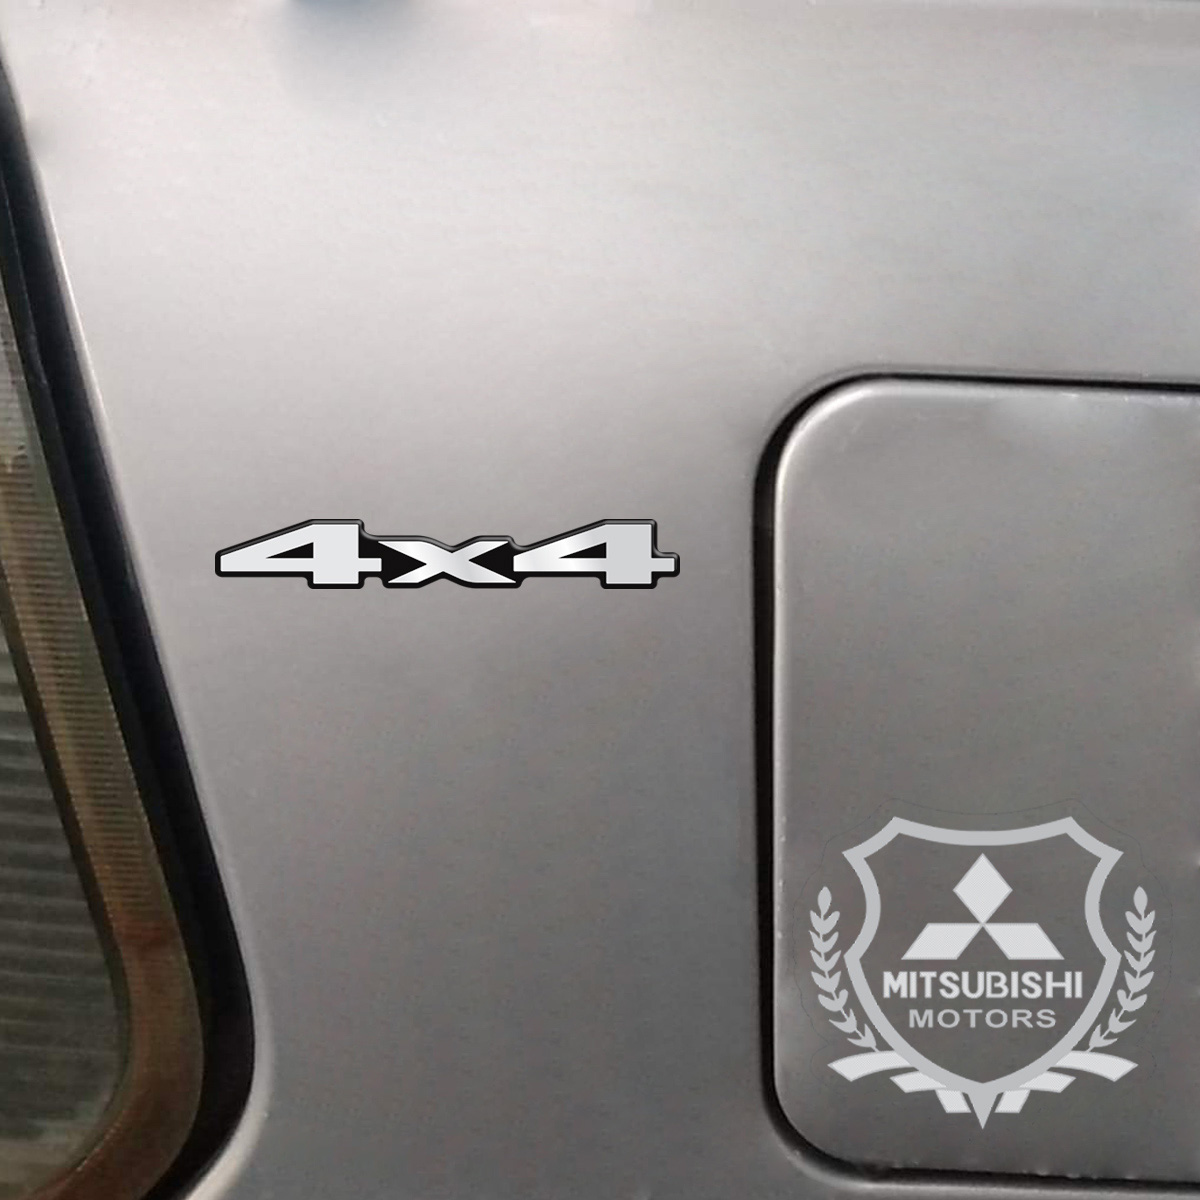 Kit Emblemas Pajero Tr4 Flex 4x4 Preto Adesivos Resinados